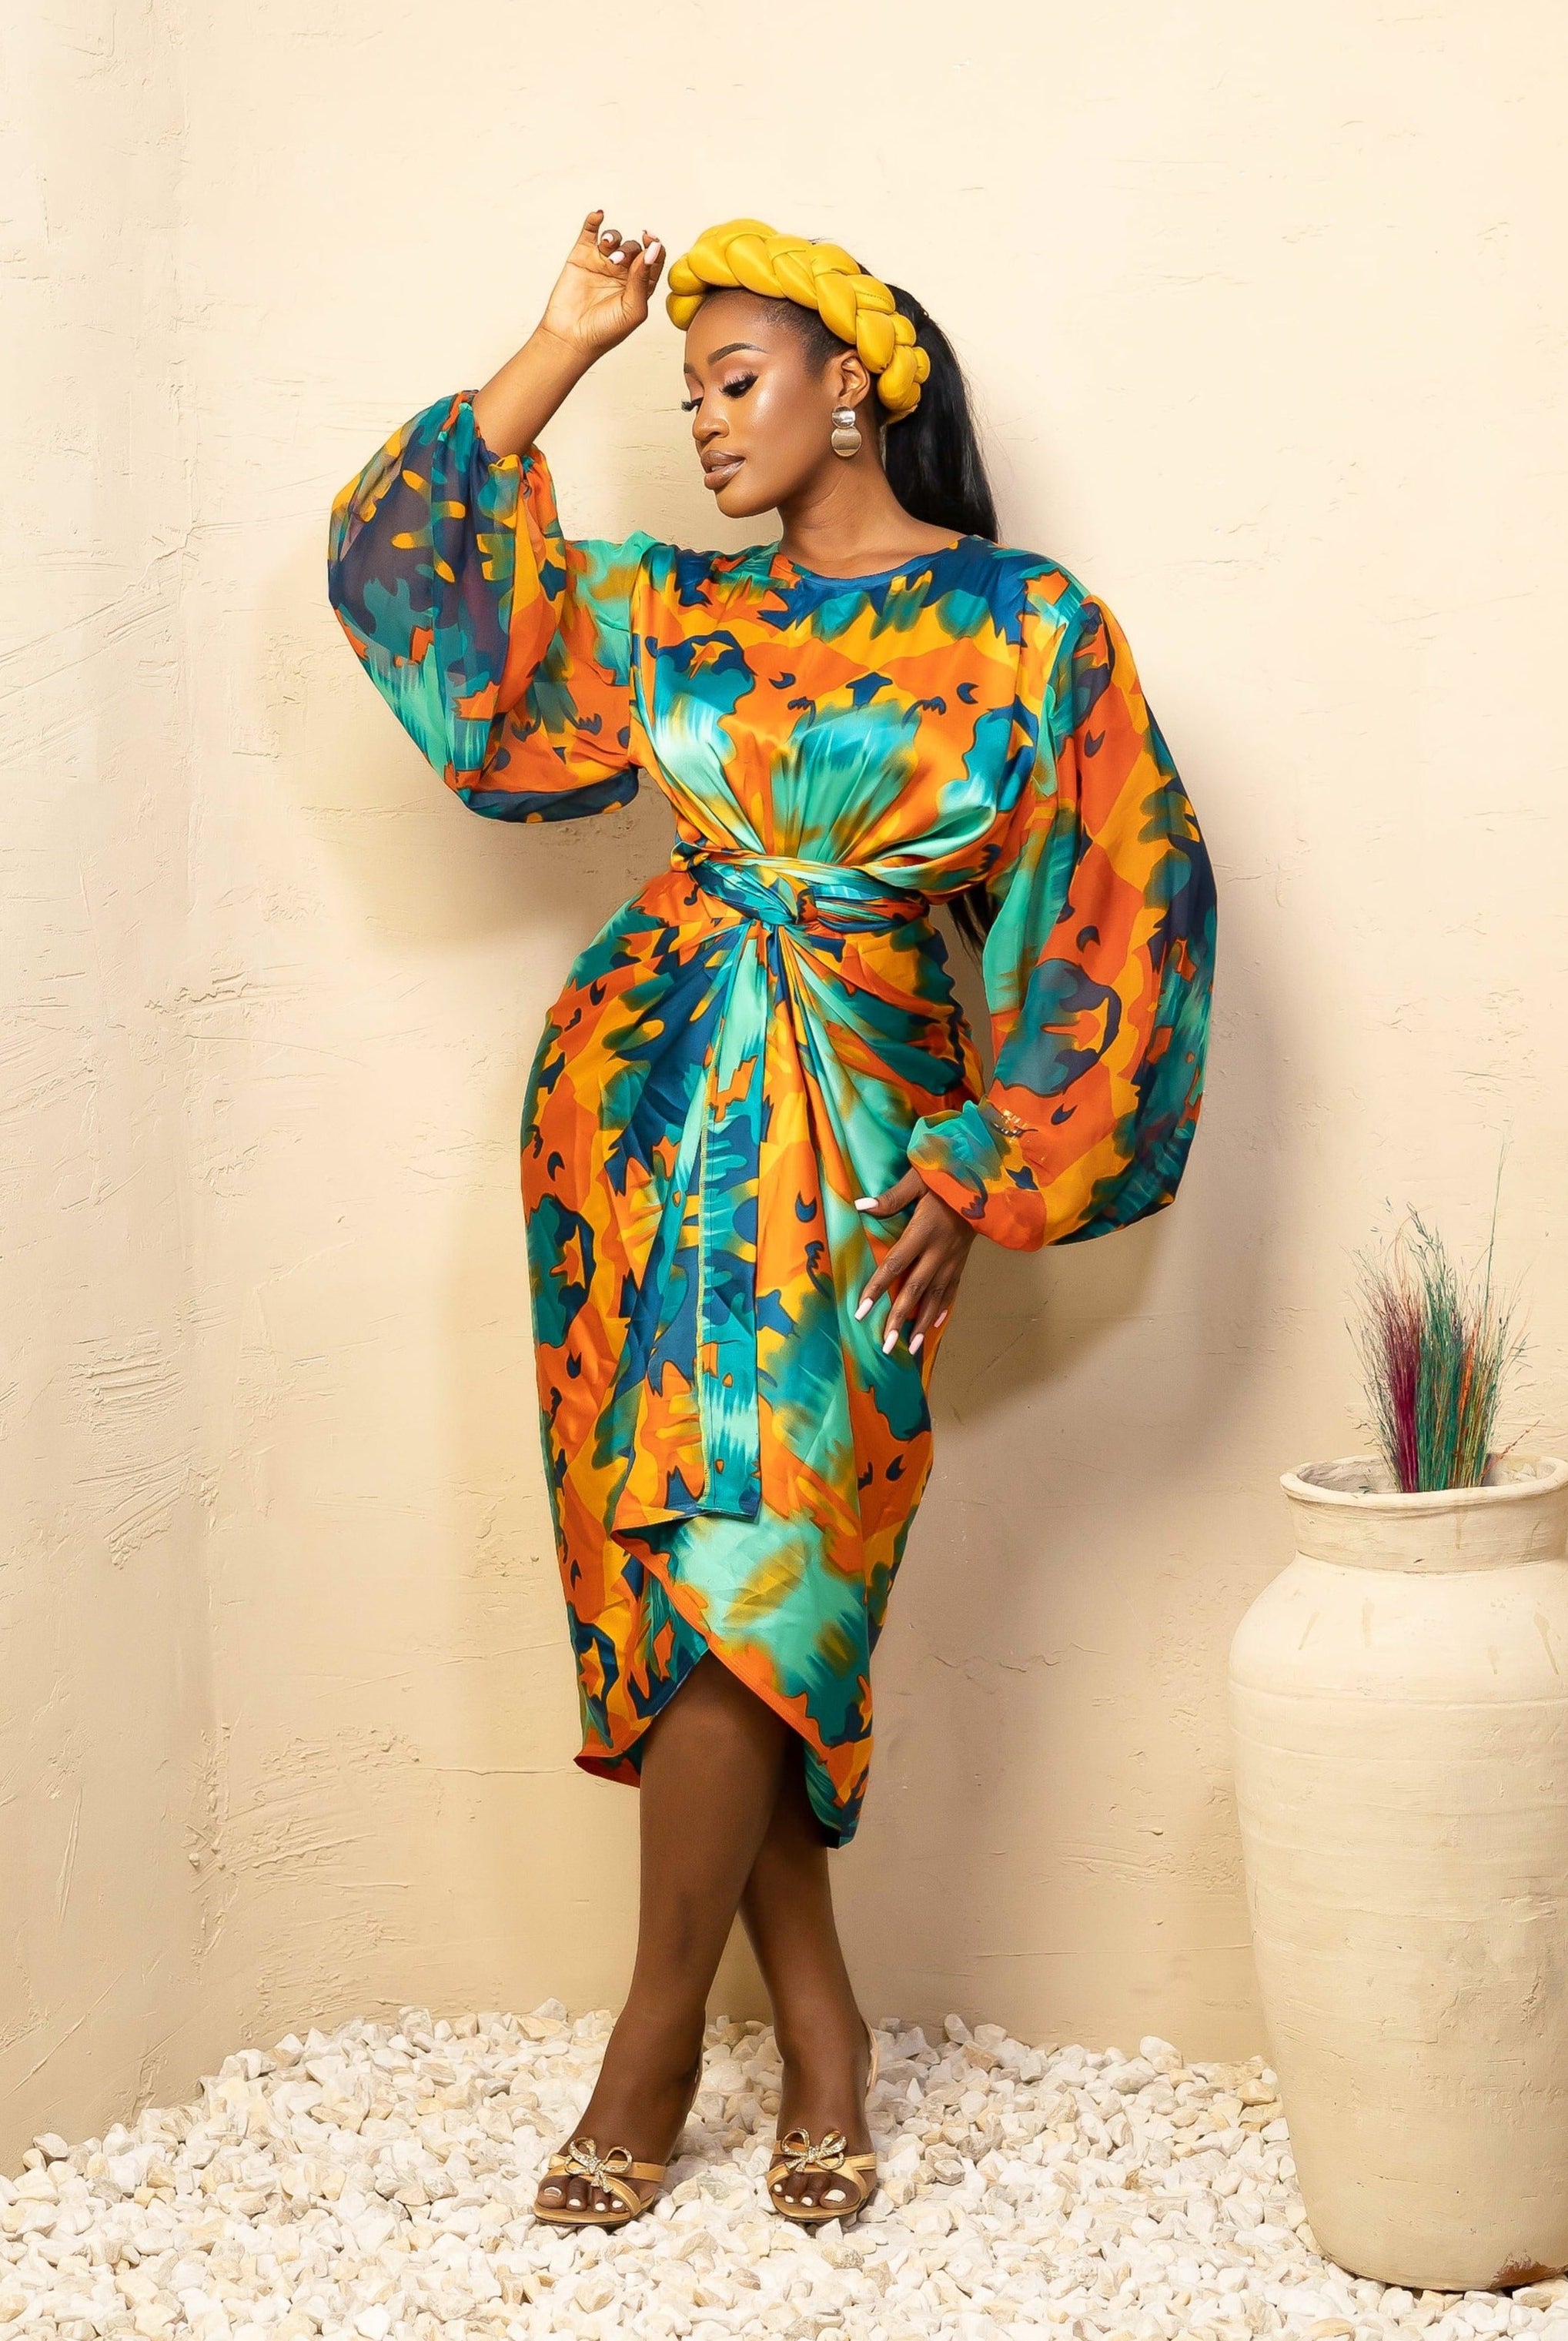 Shop African Dresses UK, Modern African Clothing